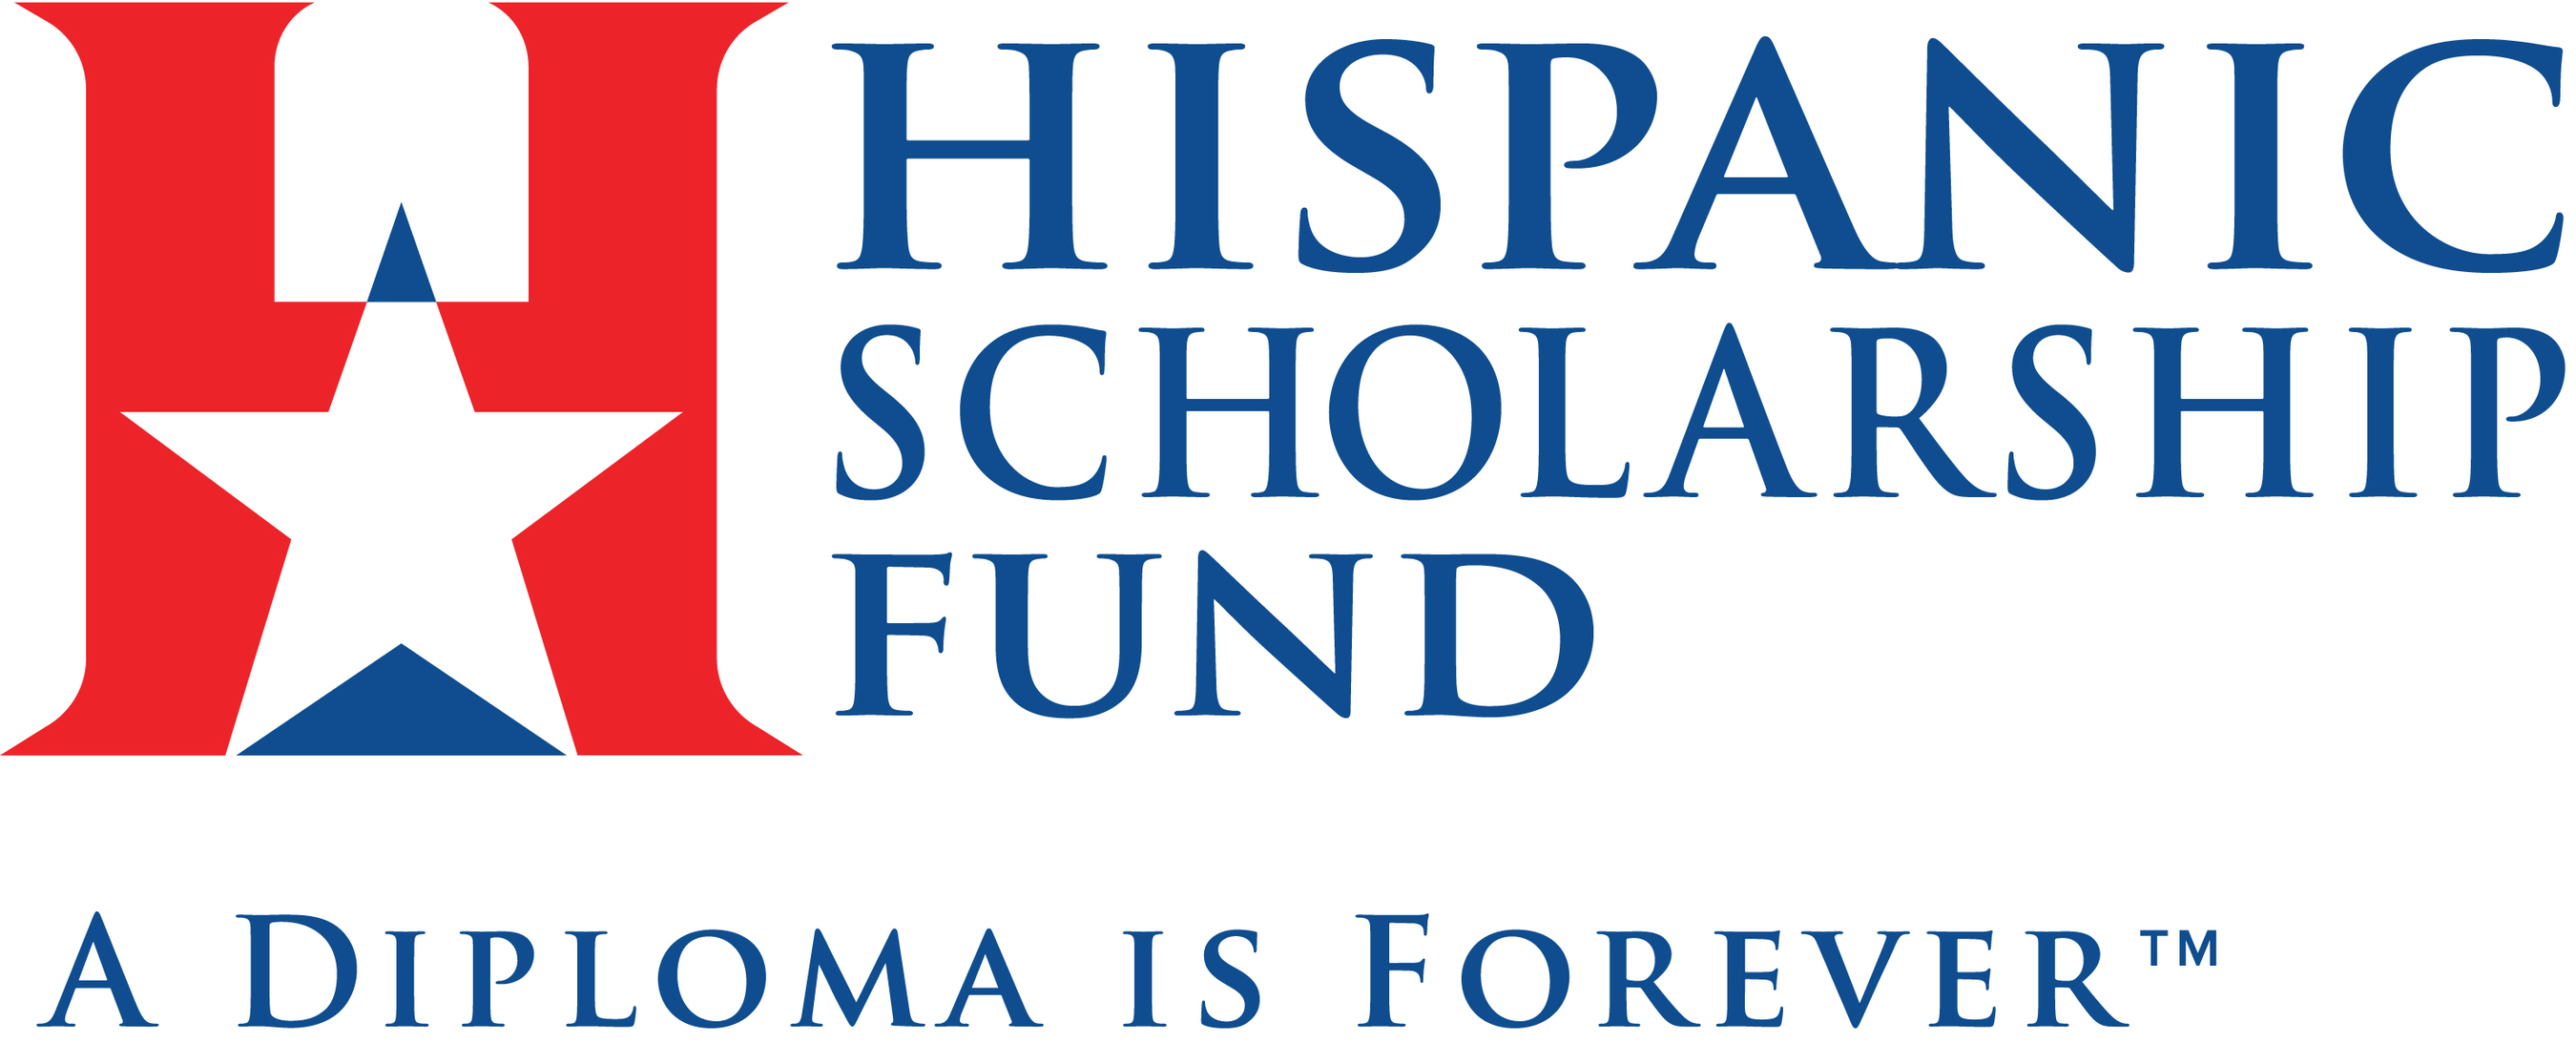 Hispanic Scholarship Fund. (PRNewsFoto/Hispanic Scholarship Fund) (PRNewsFoto/Hispanic Scholarship Fund)